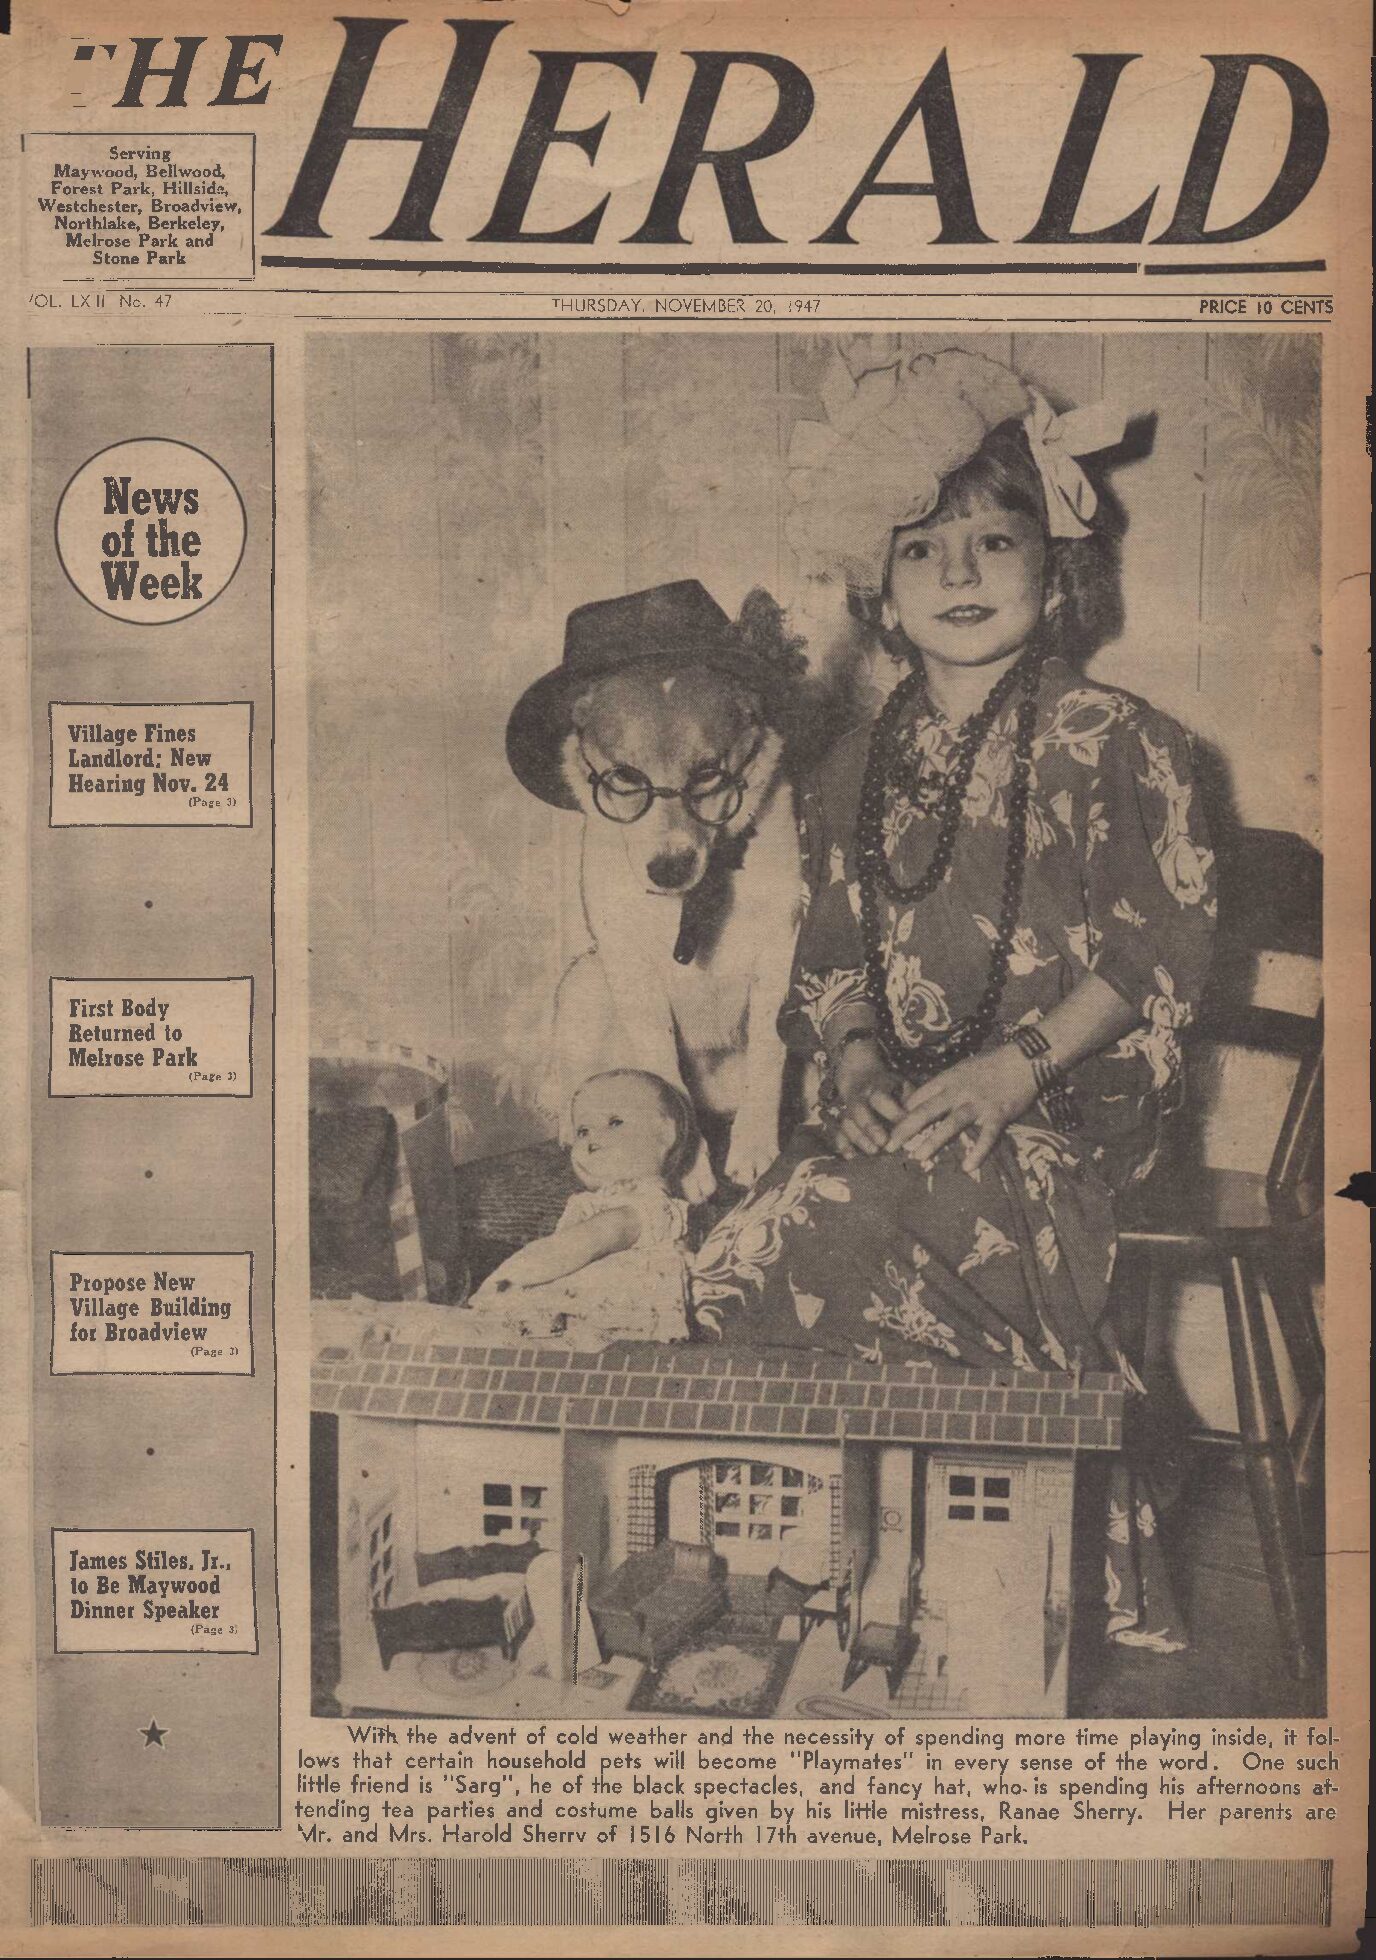 The Herald – 19471120